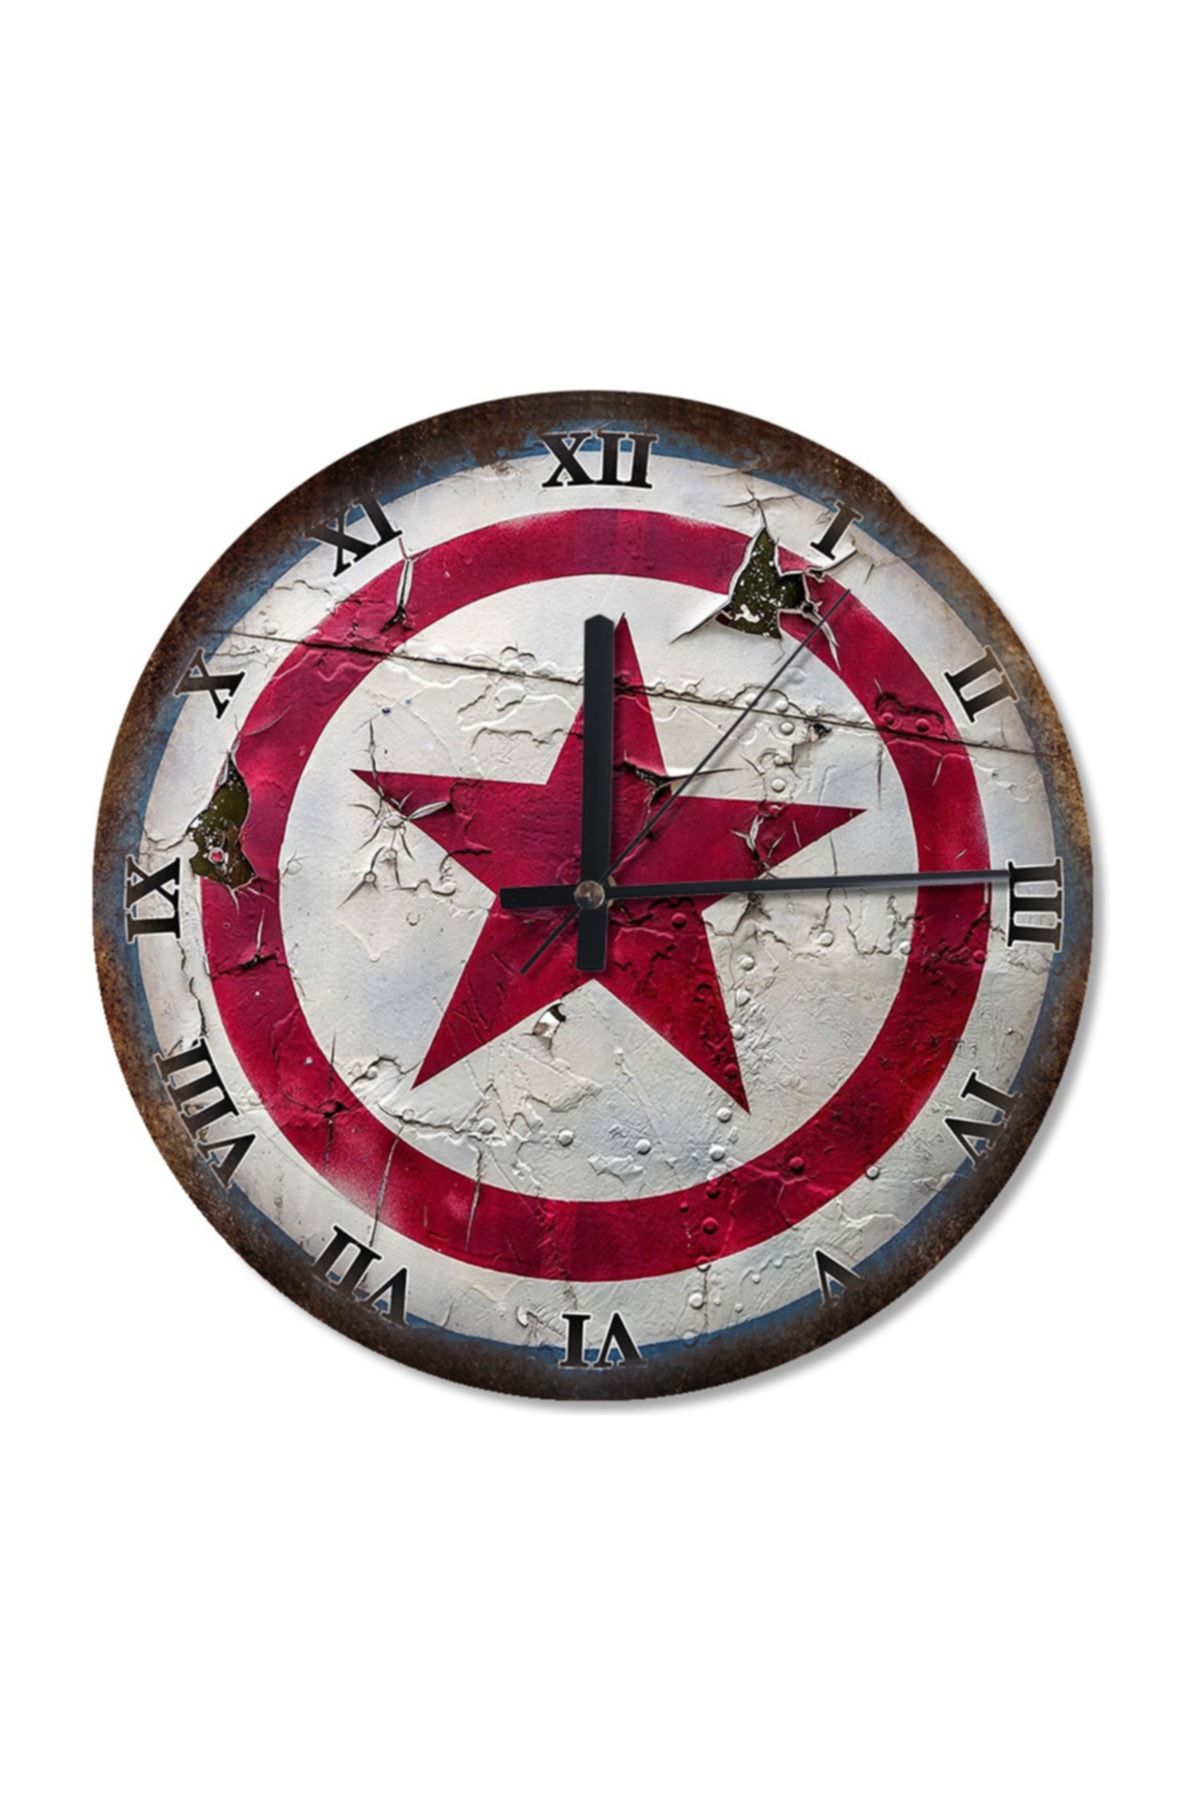 Cakatablo 50 Cm Çap Kaptan Amerika Logo Dekoratif Duvar Saati